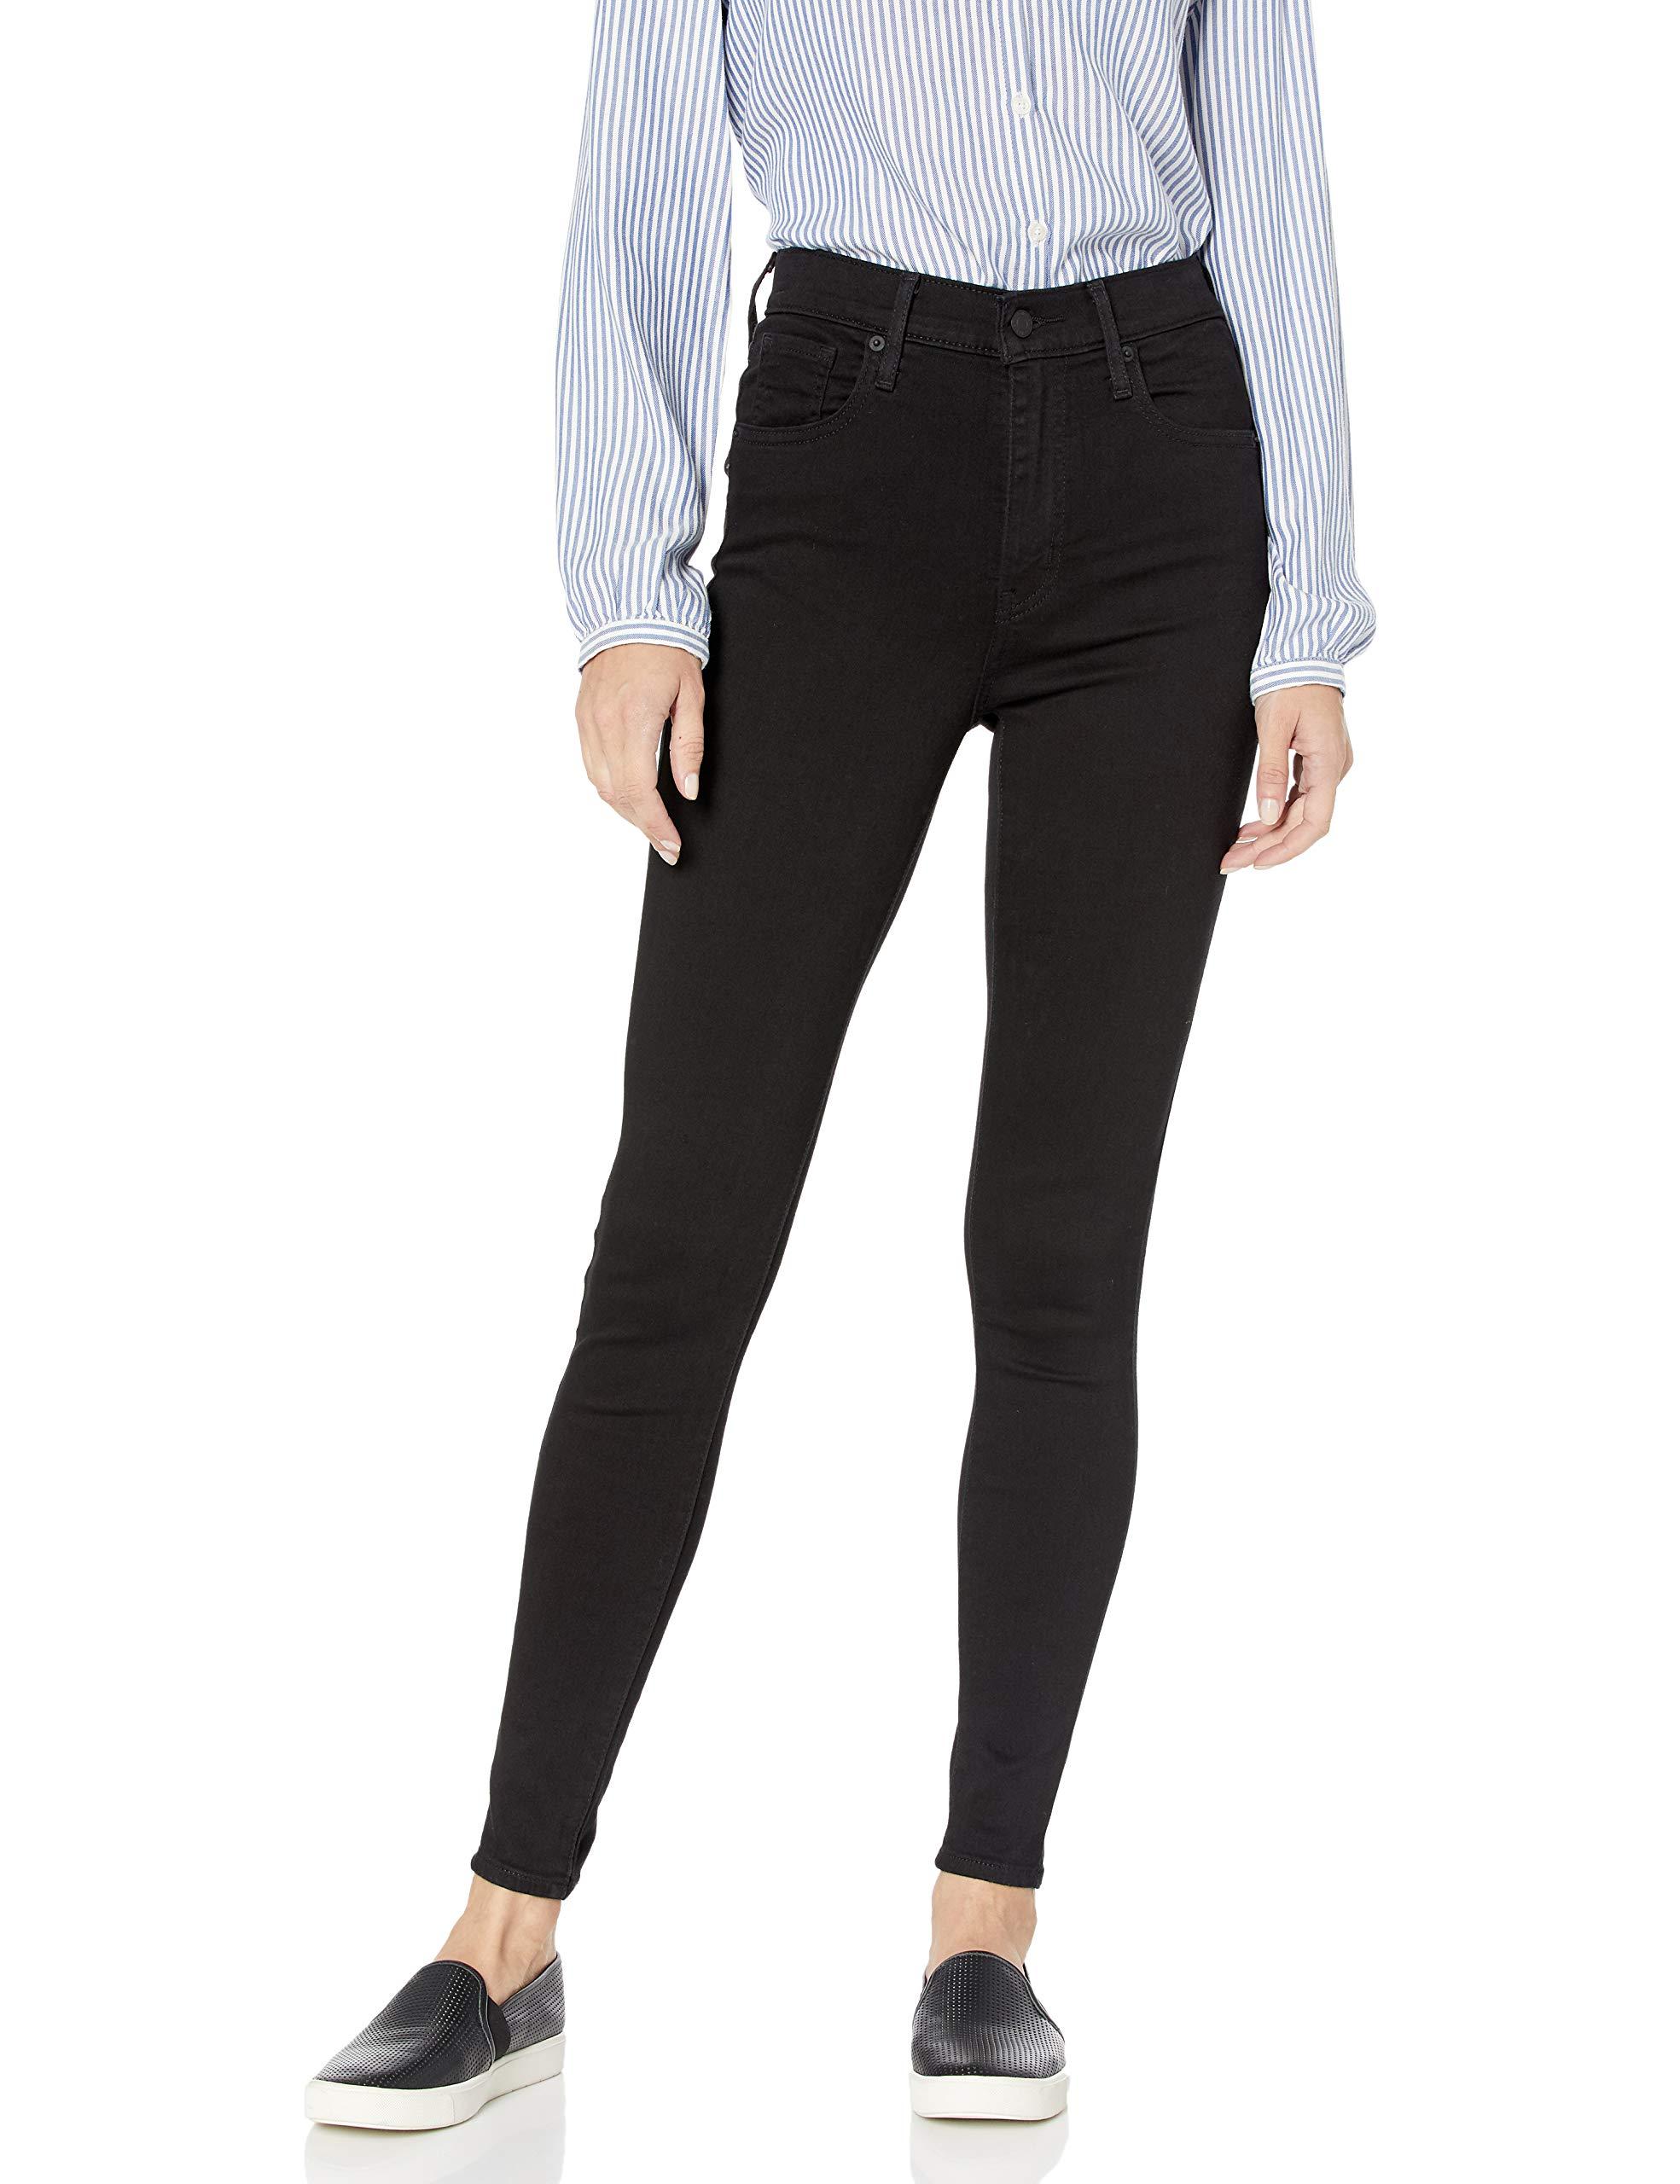 Levi's Denim Mile High Super Skinny Jeans in Black - Save 16% - Lyst